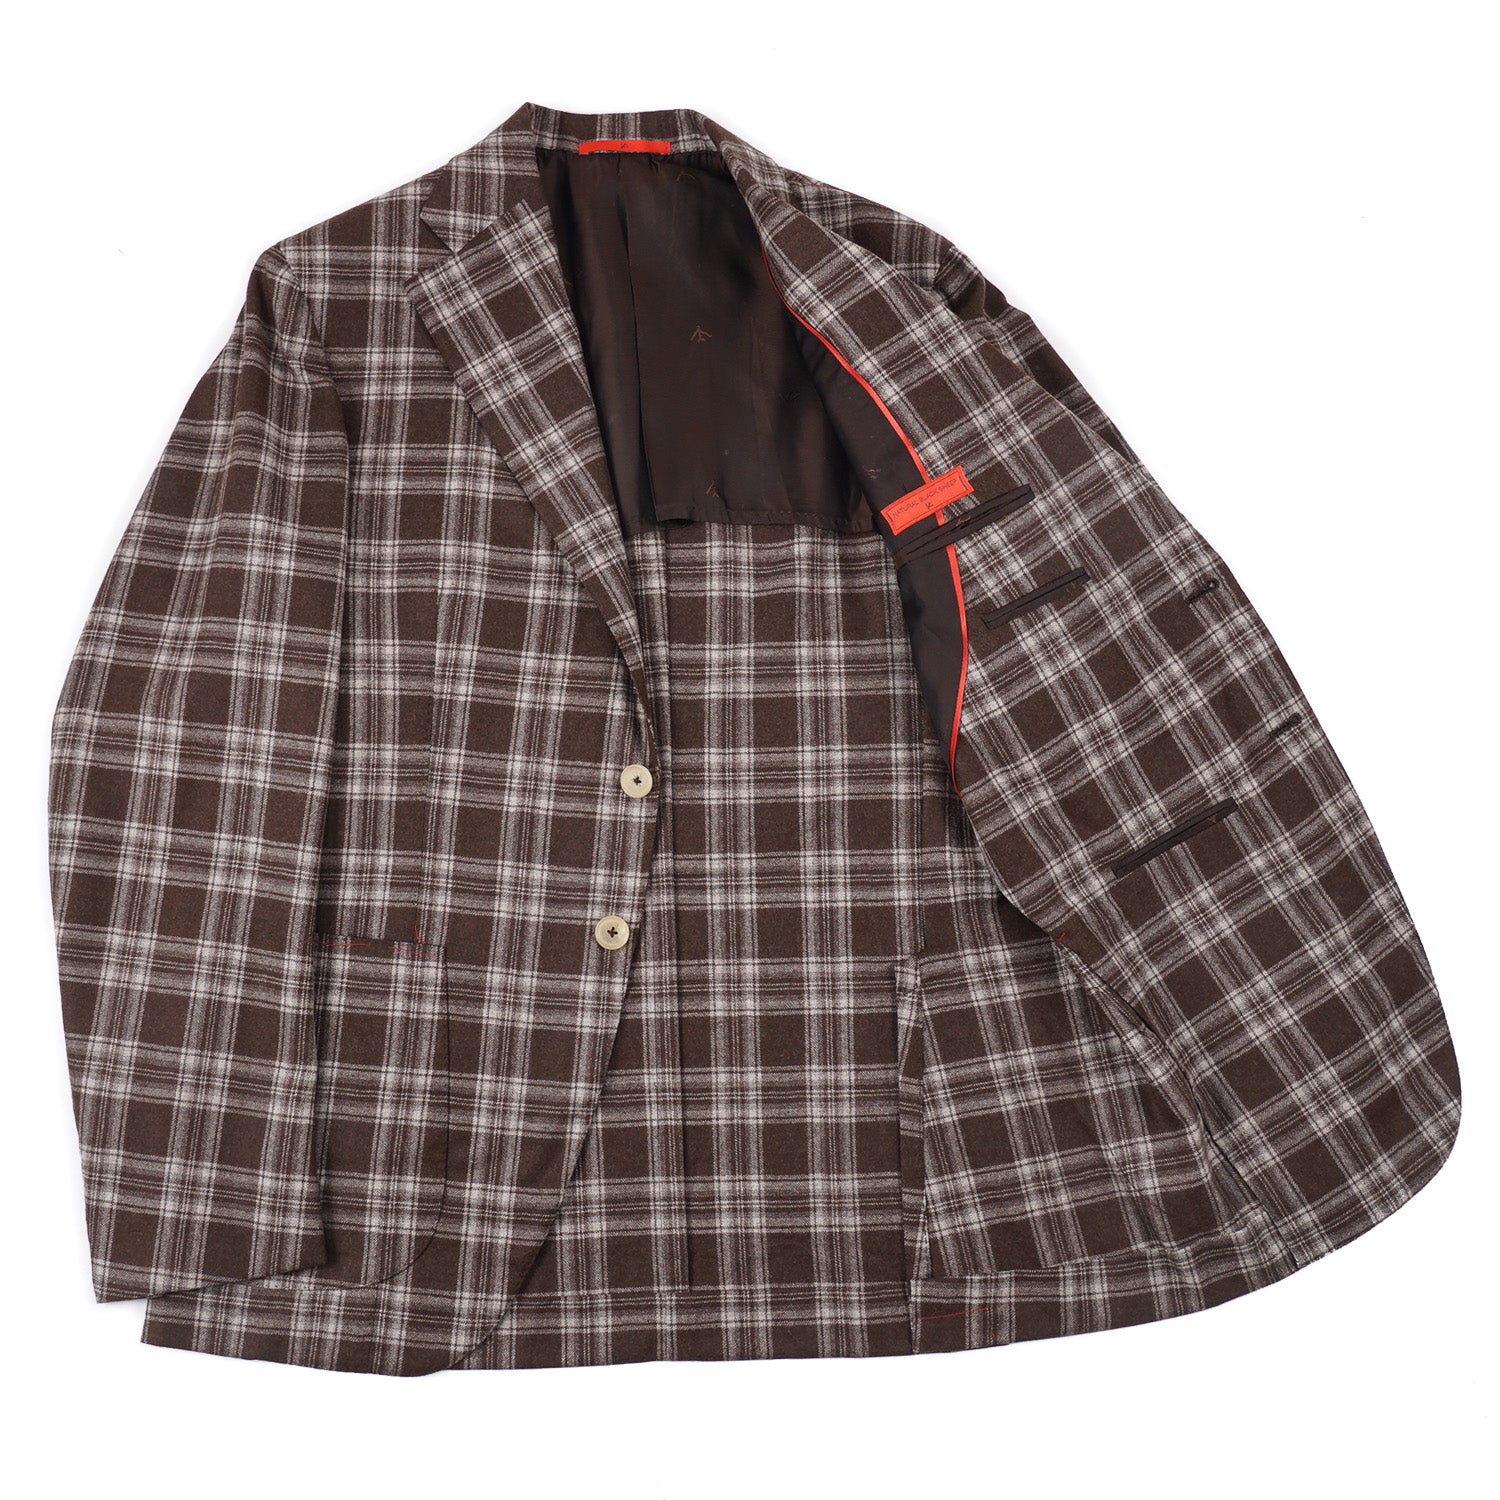 Isaia 'Marechiaro' Soft Flannel Wool Suit - Top Shelf Apparel